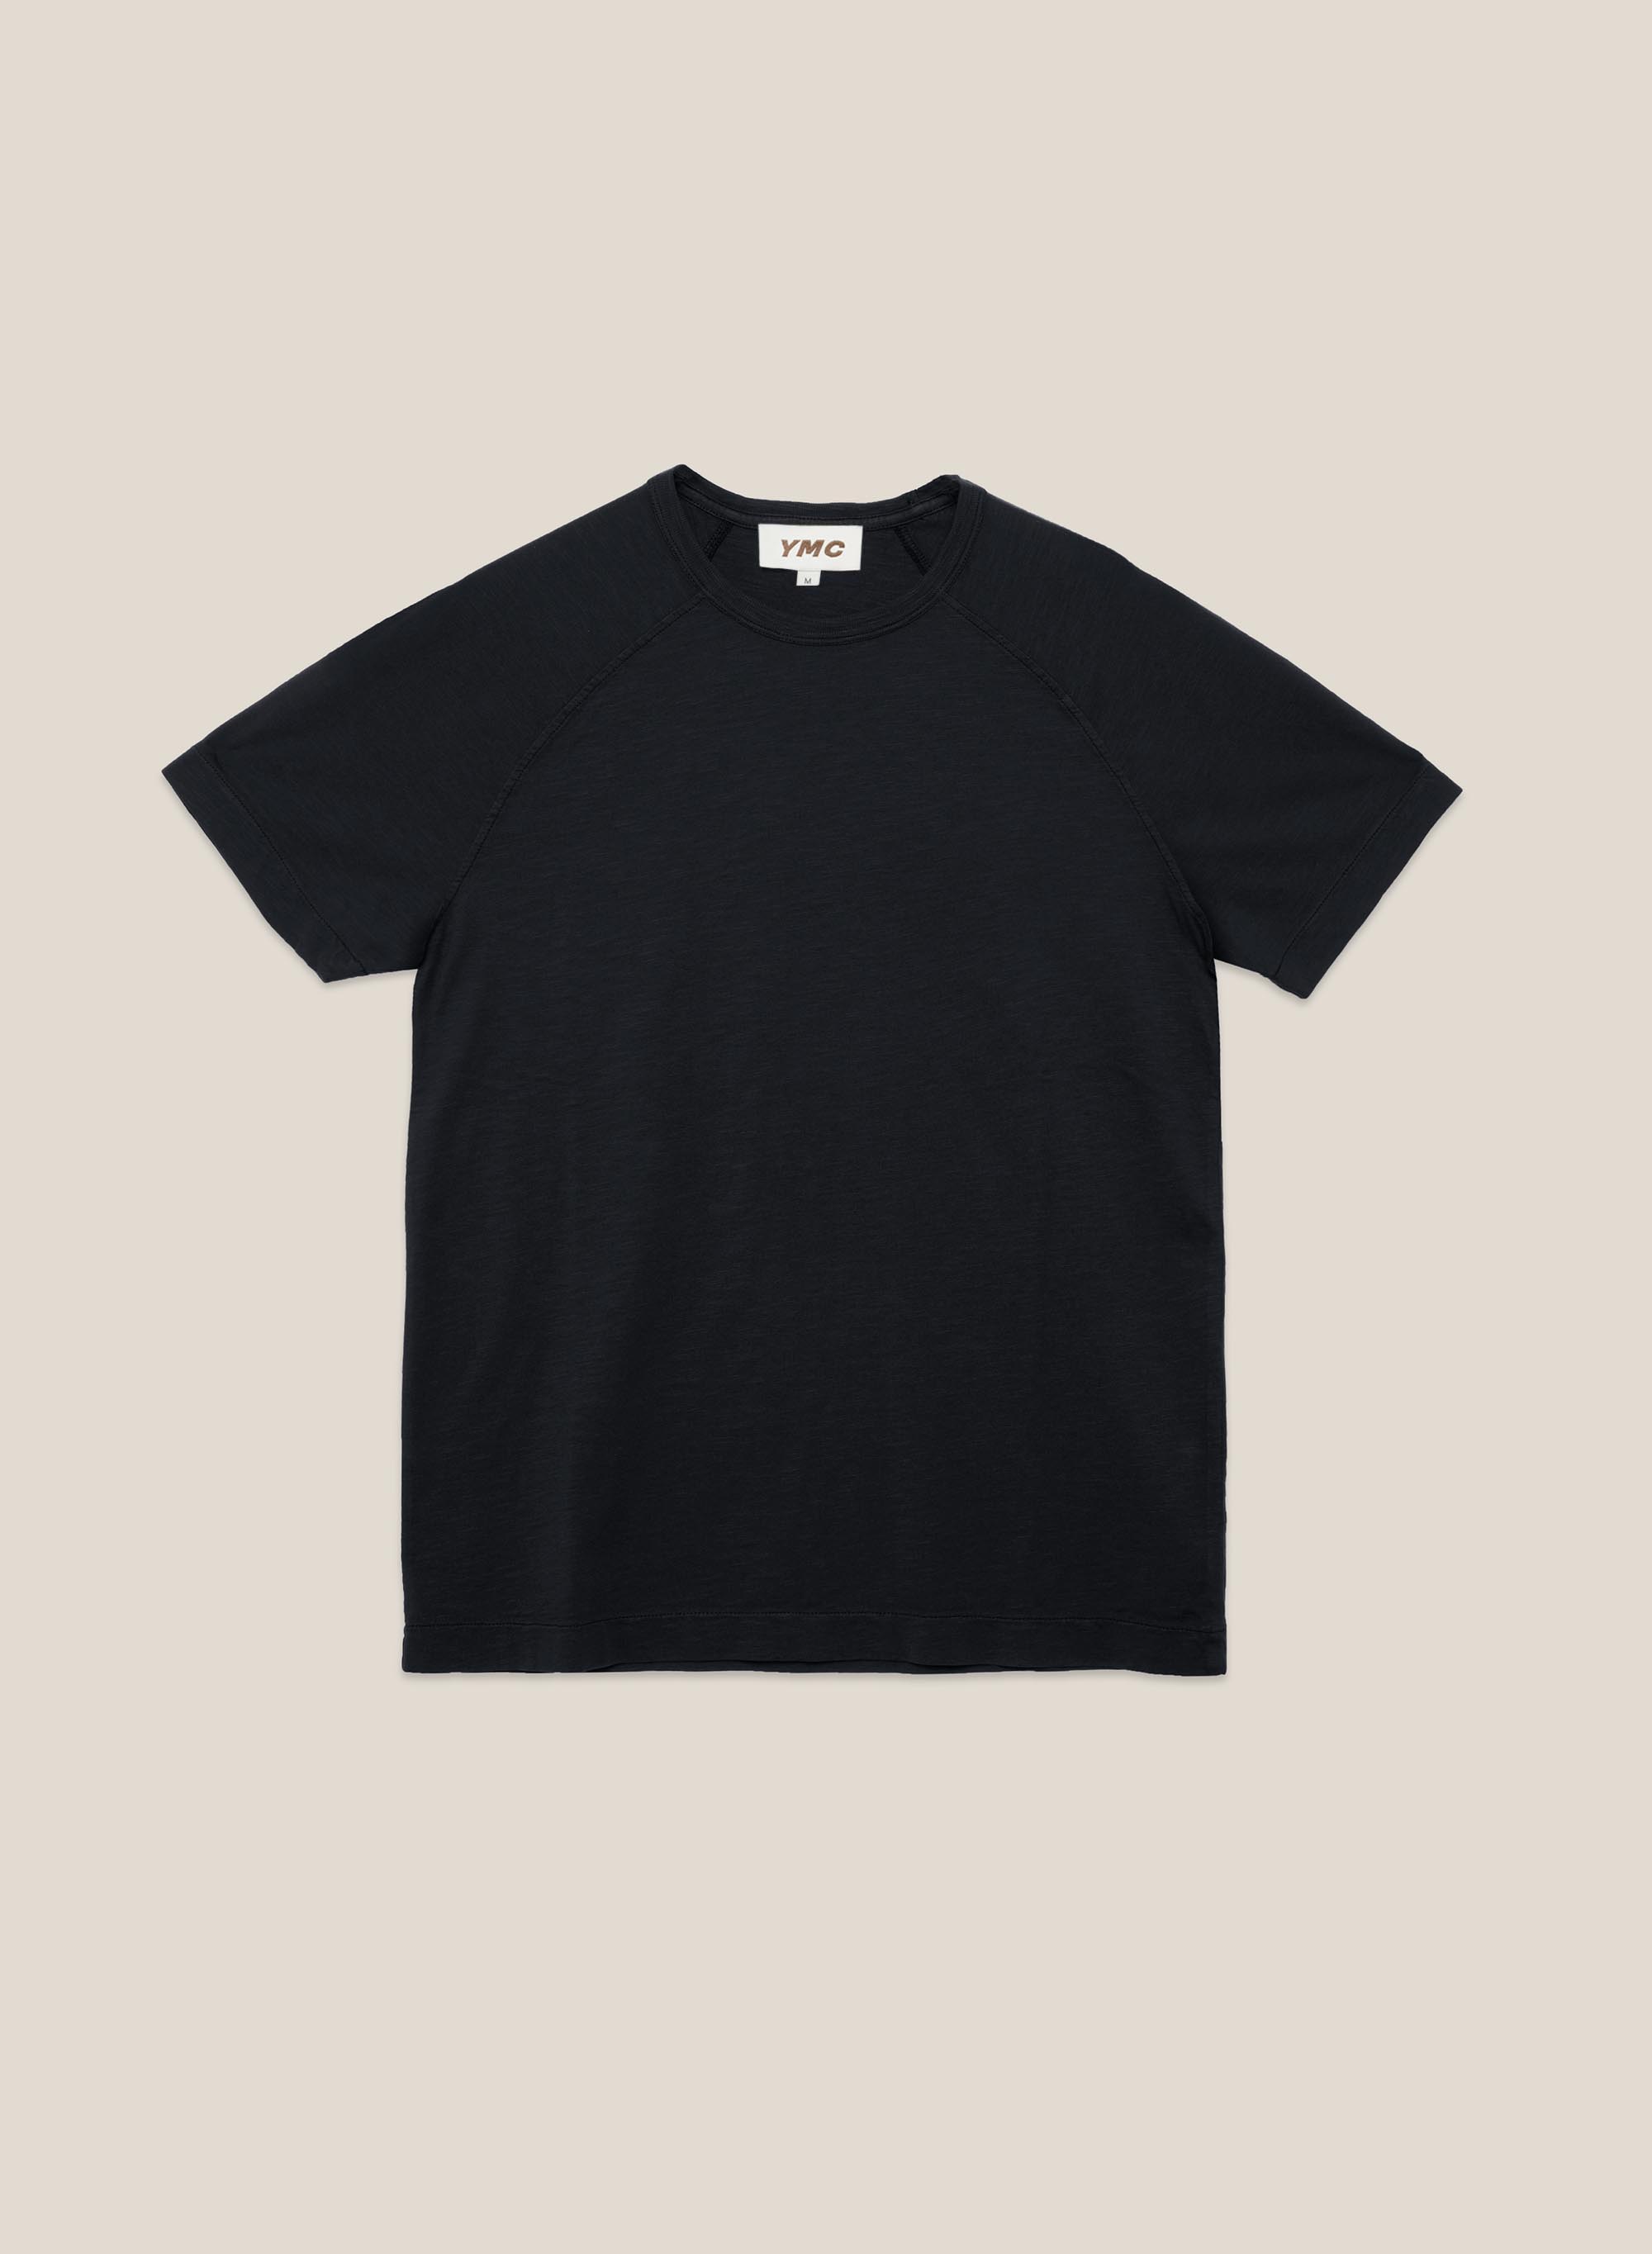 YMC Television T-Shirt : Black	